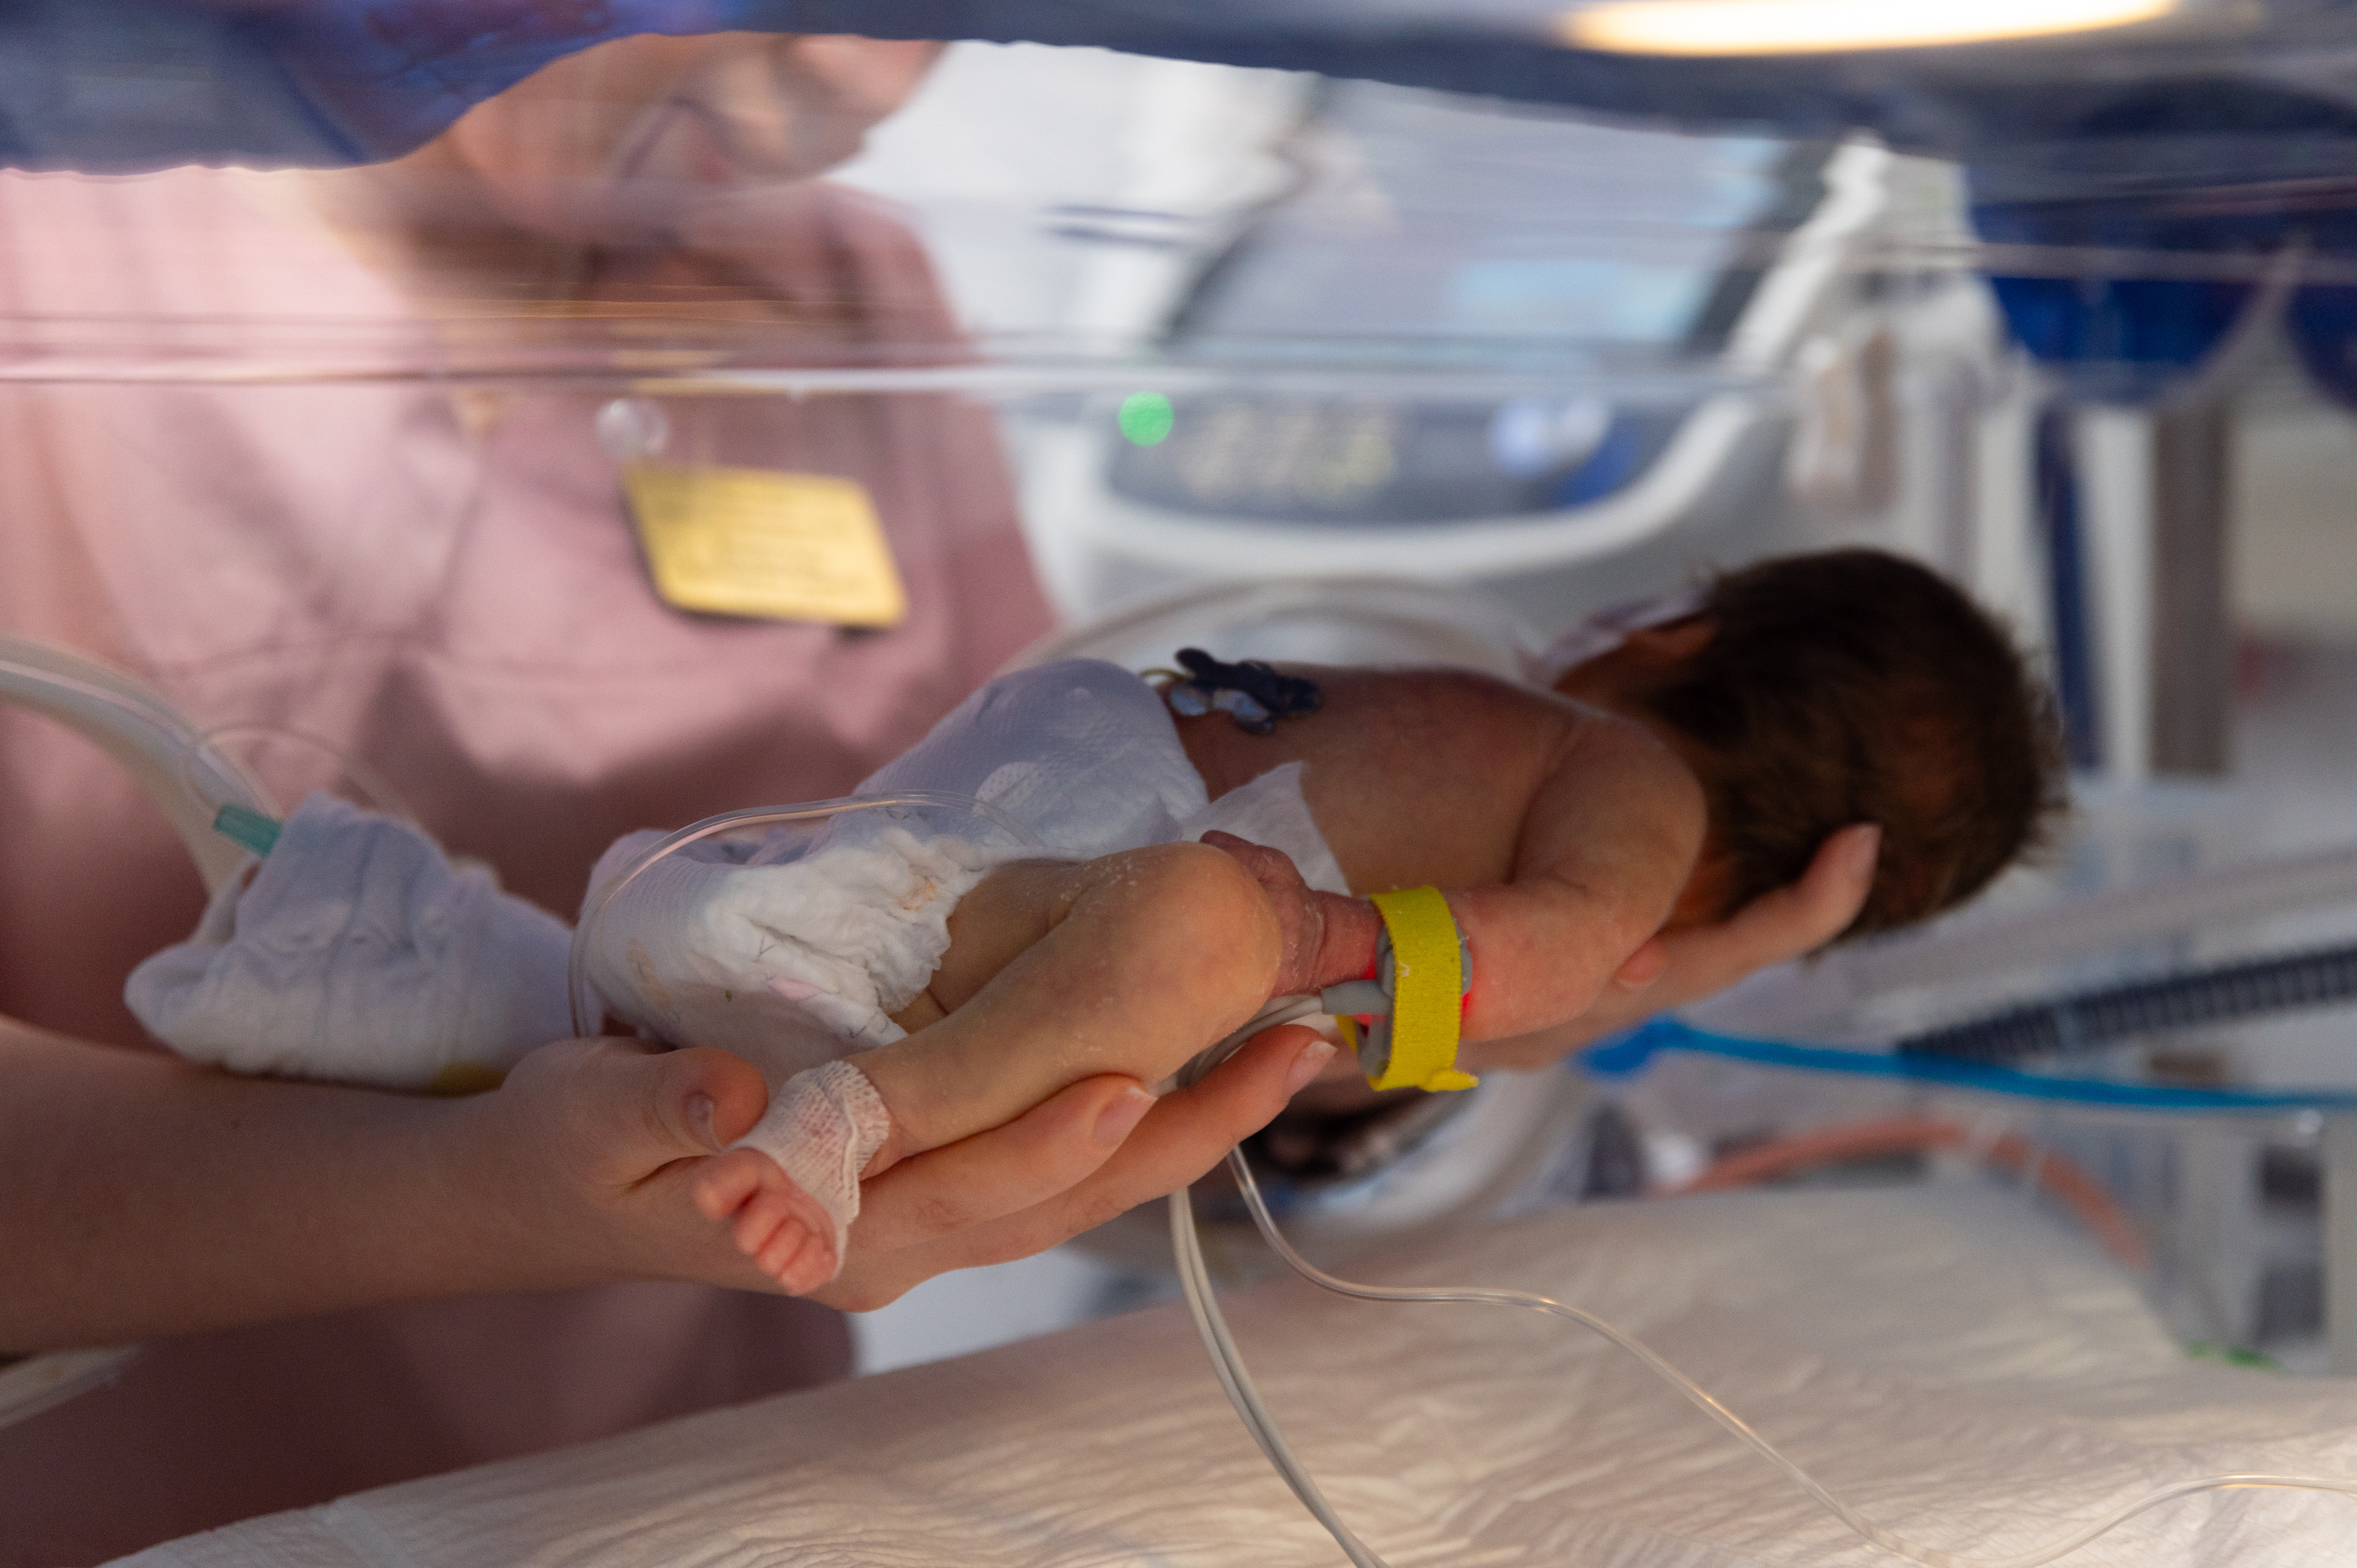 A newborn baby receives care in an incubator